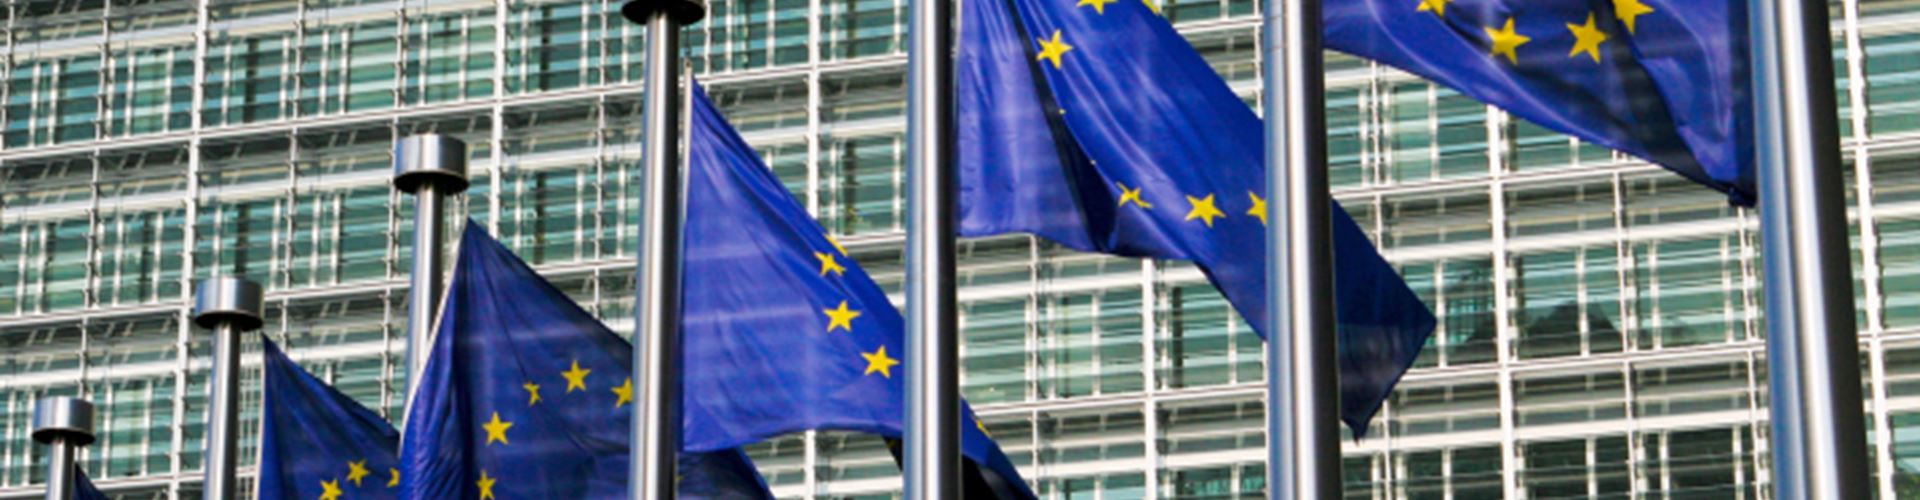 UK digital economy sixth best in EU: European Commission